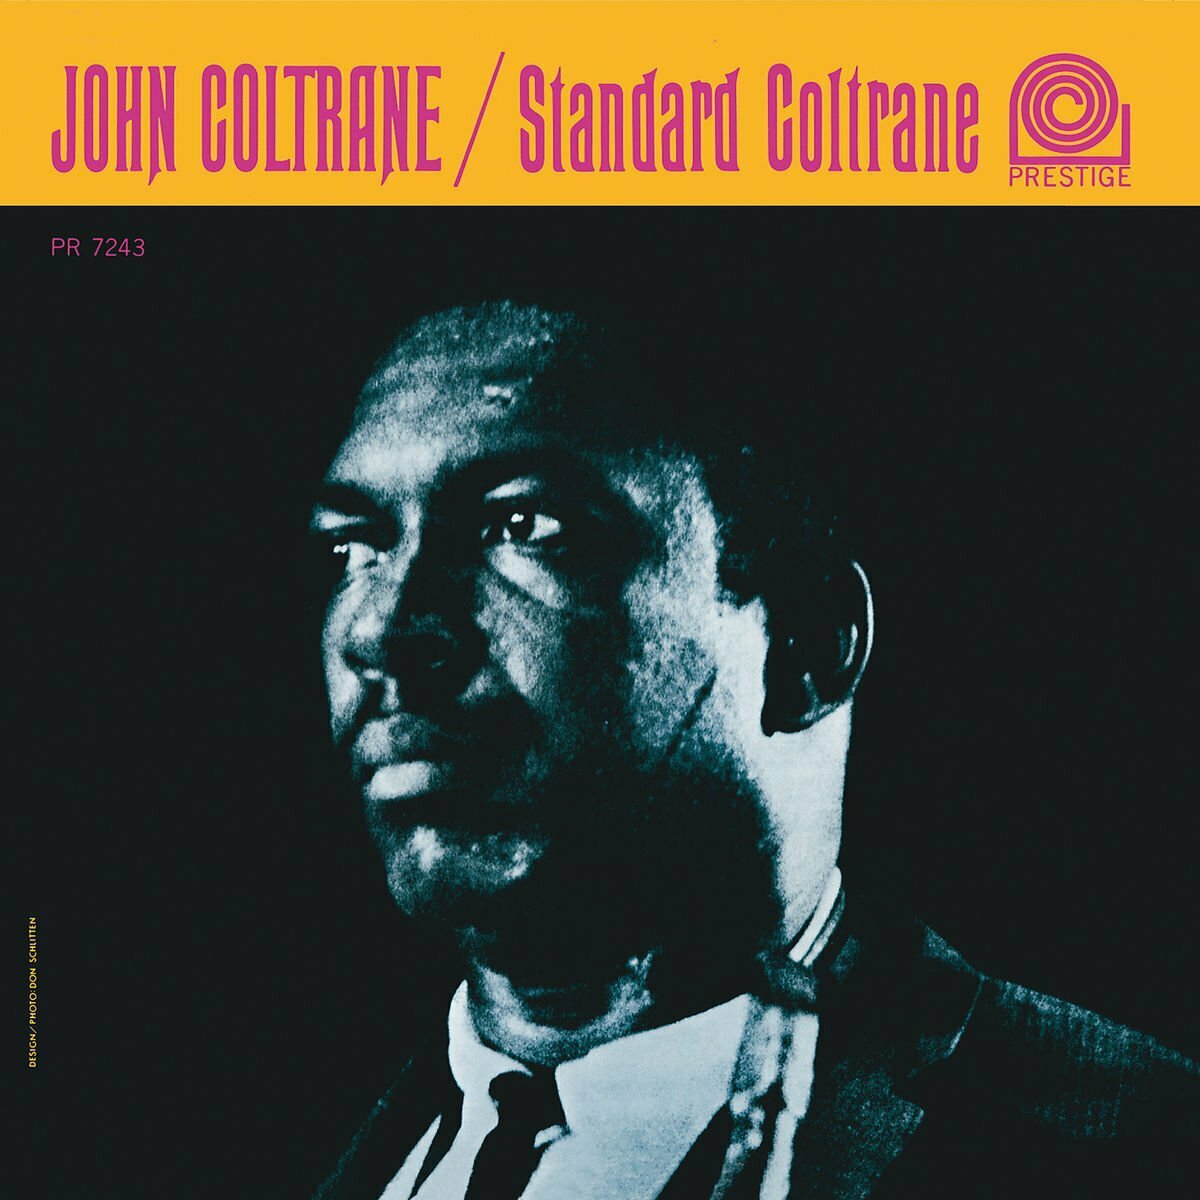 AUDIO CD John Coltrane - Standard Coltrane (1 CD)